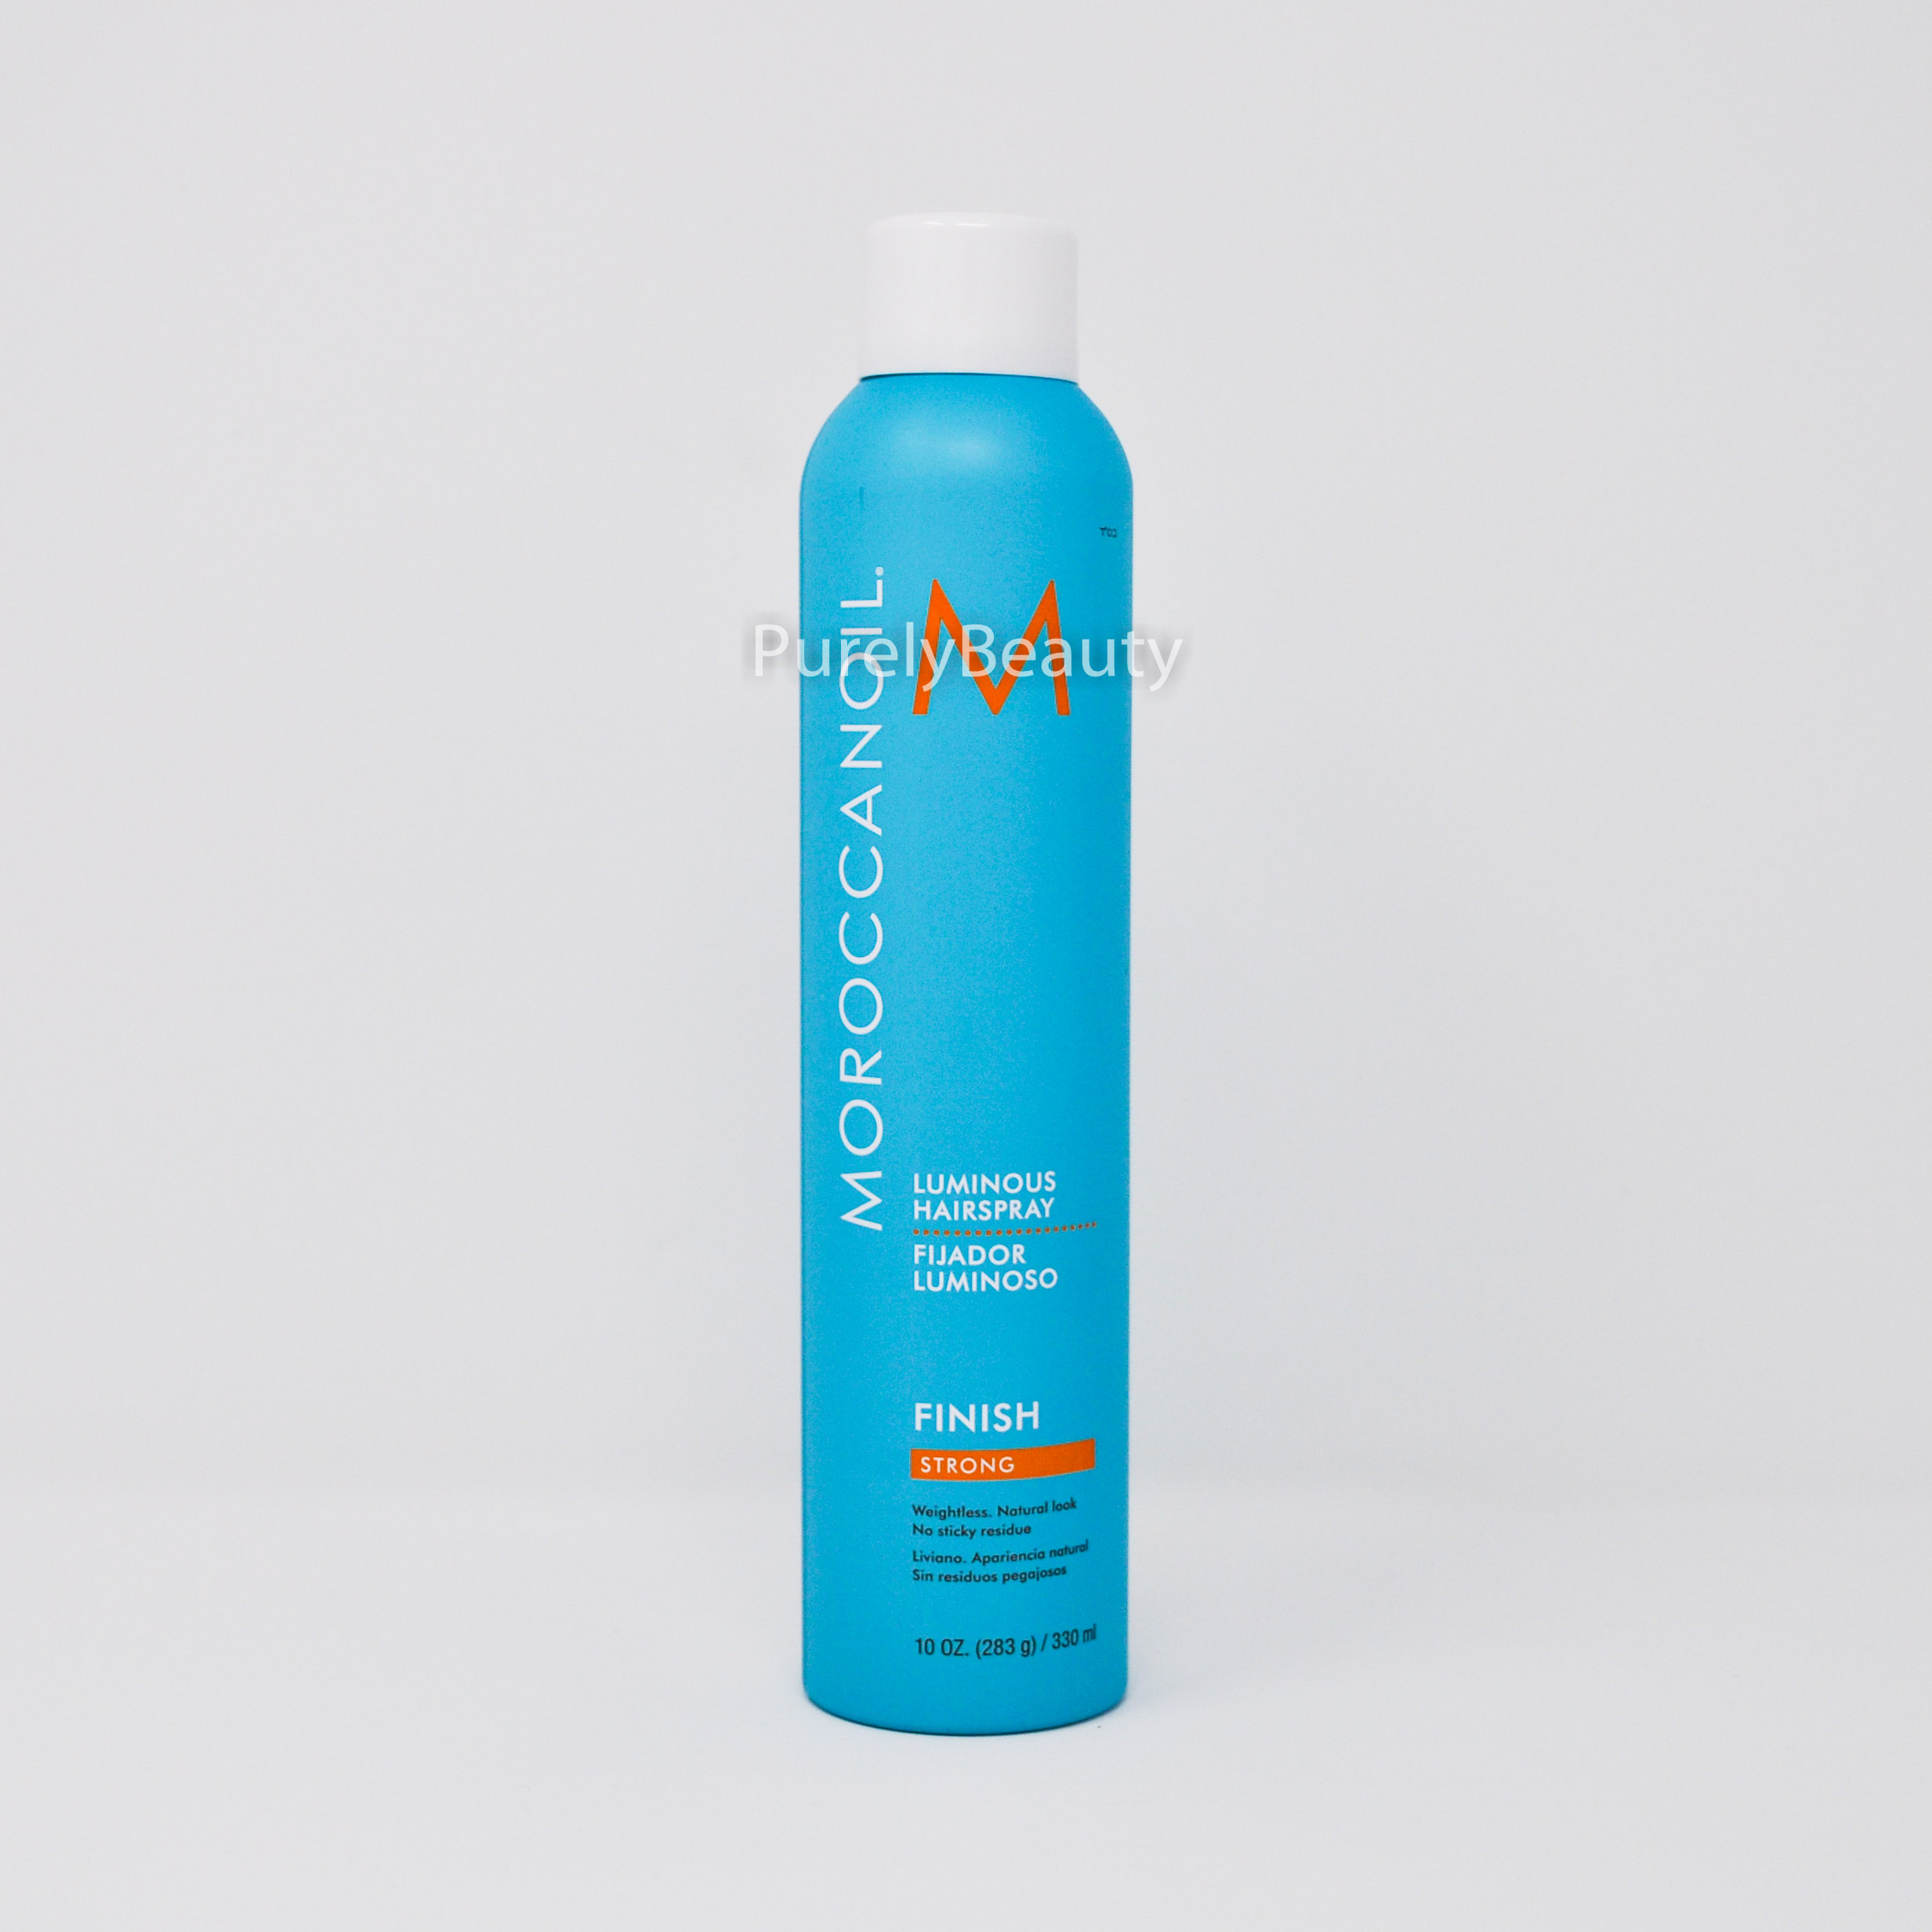 moroccanoil luminous hairspray walmart